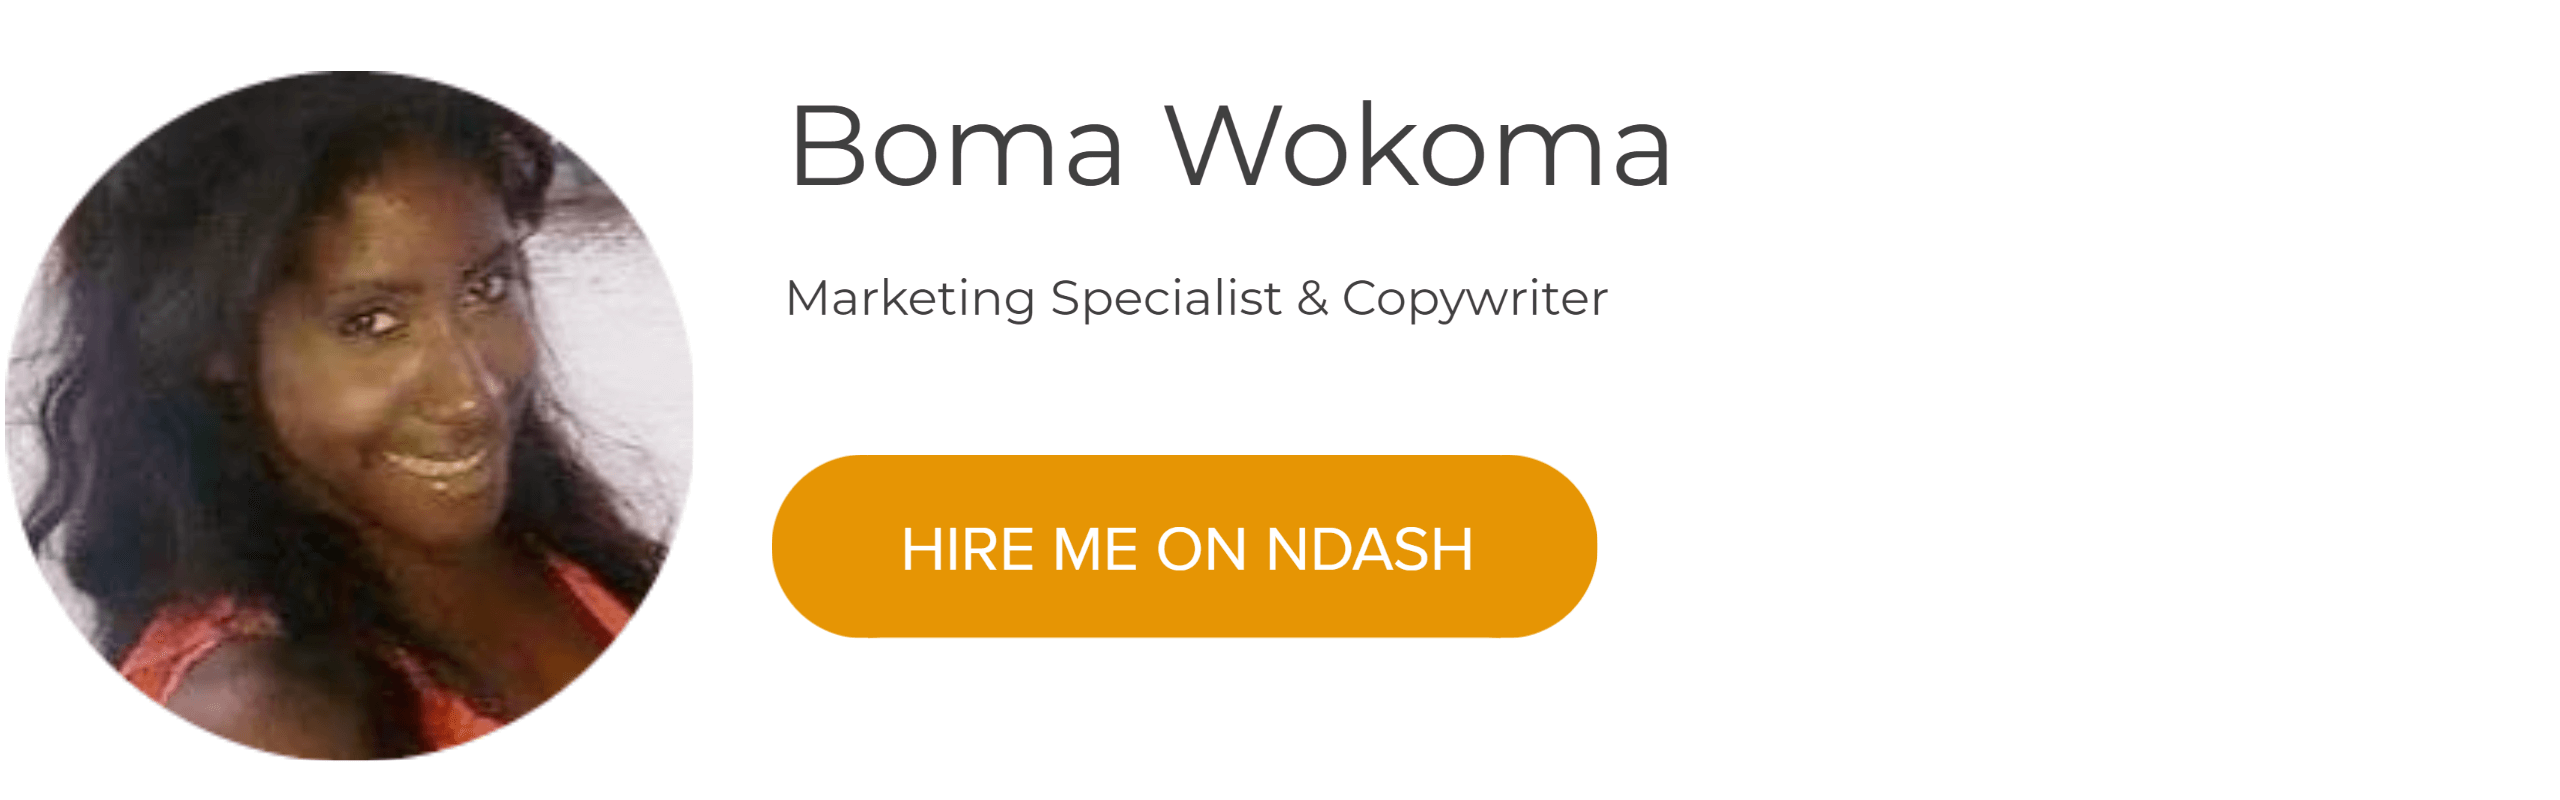 Boma Wokoma: Marketing Specialist & Copywriter